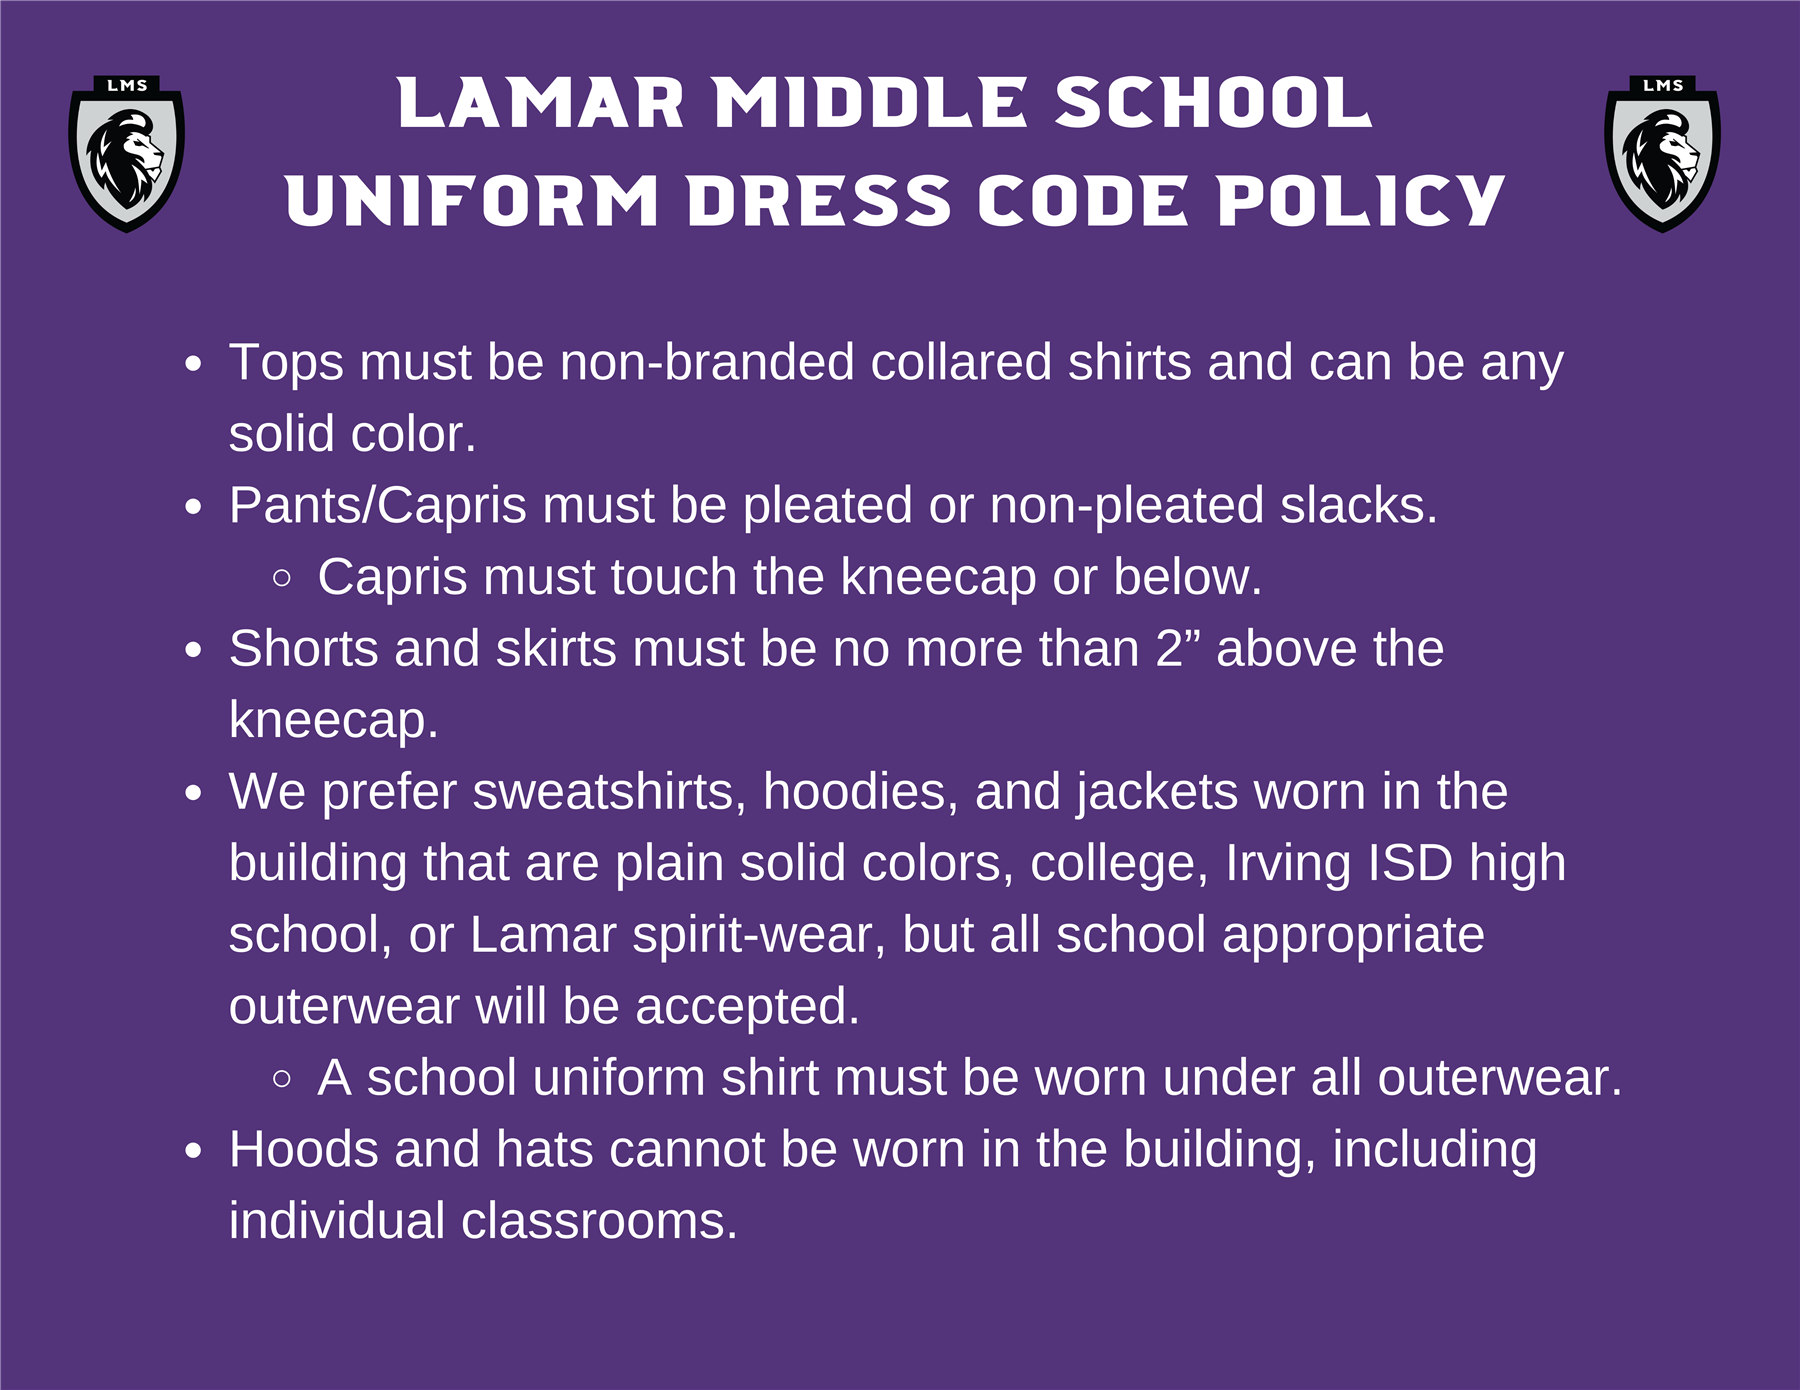 LMS School Uniform Dress Code Policy